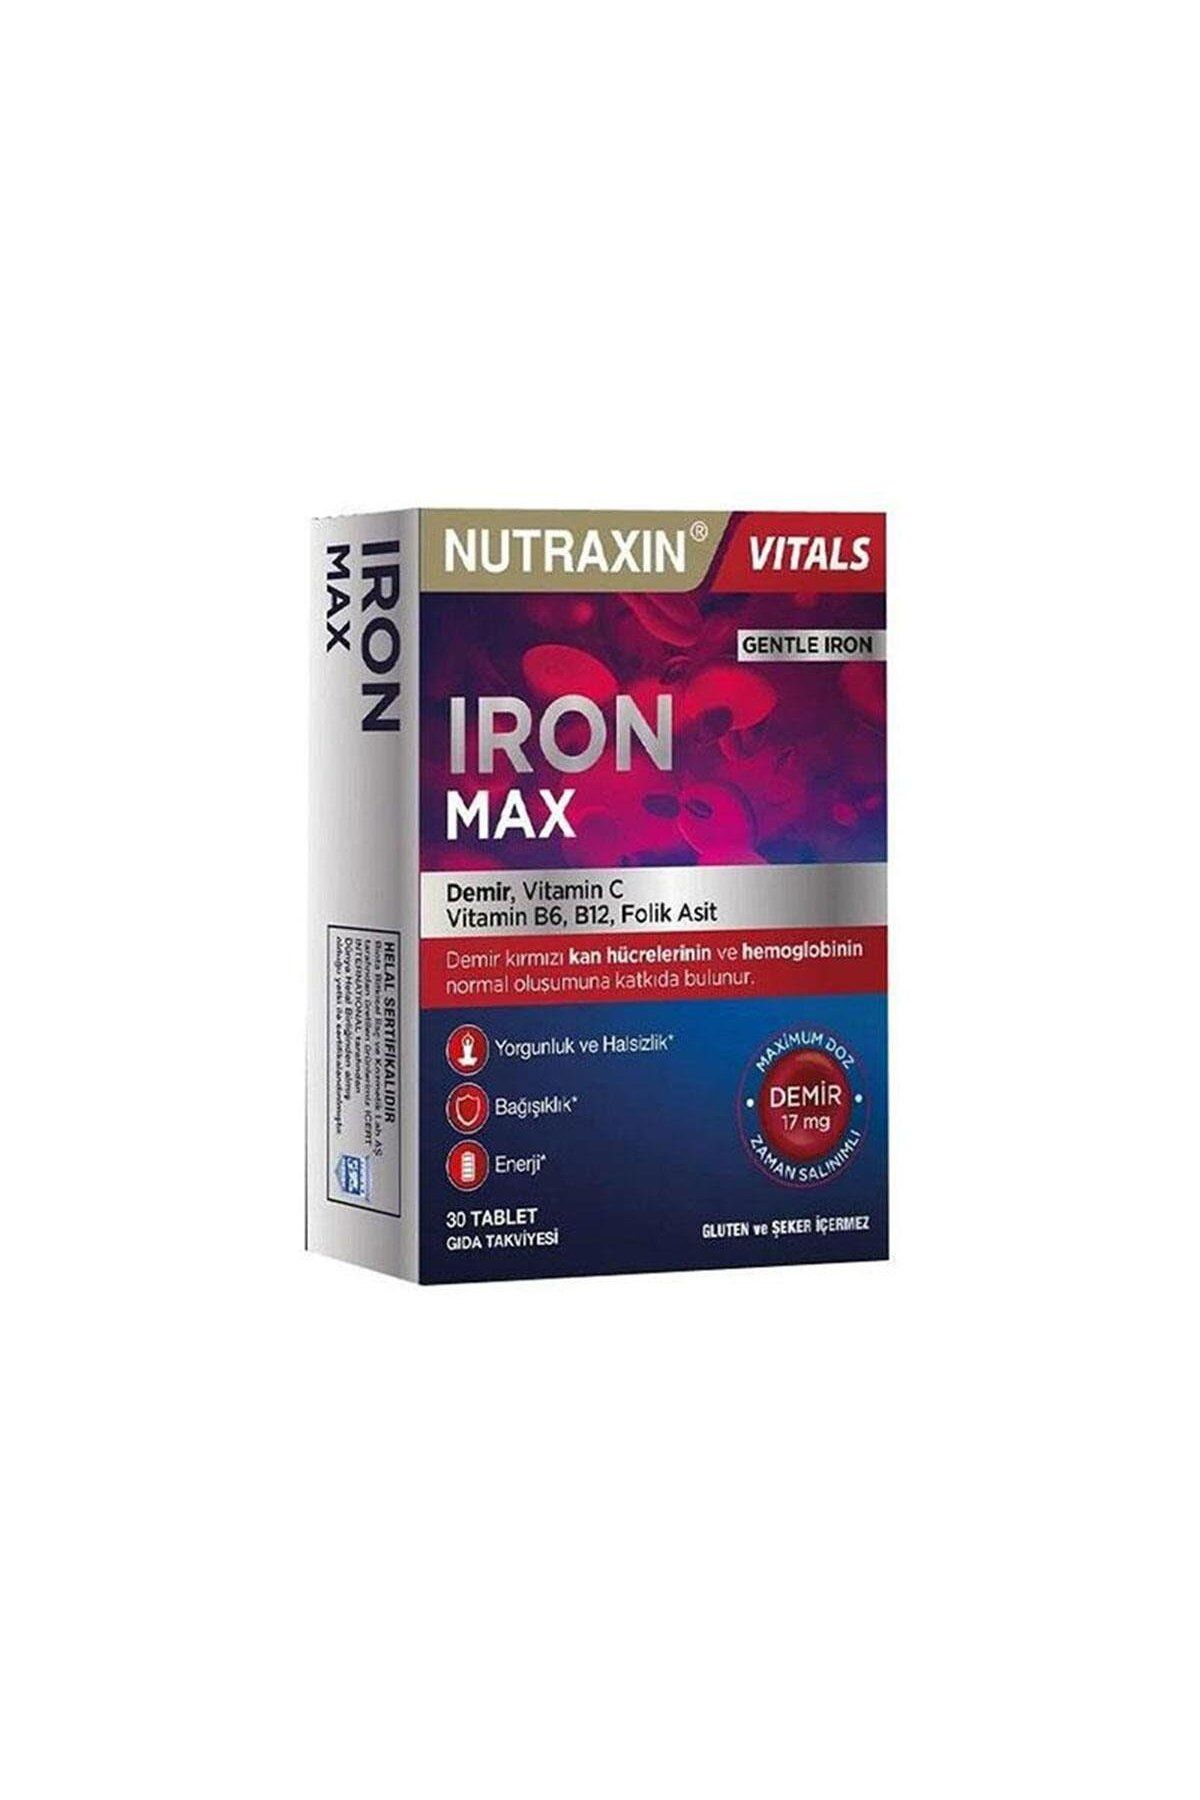 Nutraxin Iron Max 17 mg 30 Tablet Demir Vitamin C Vitamin B6 B12 Folik Asit İçeren Takviye Edici Gıda